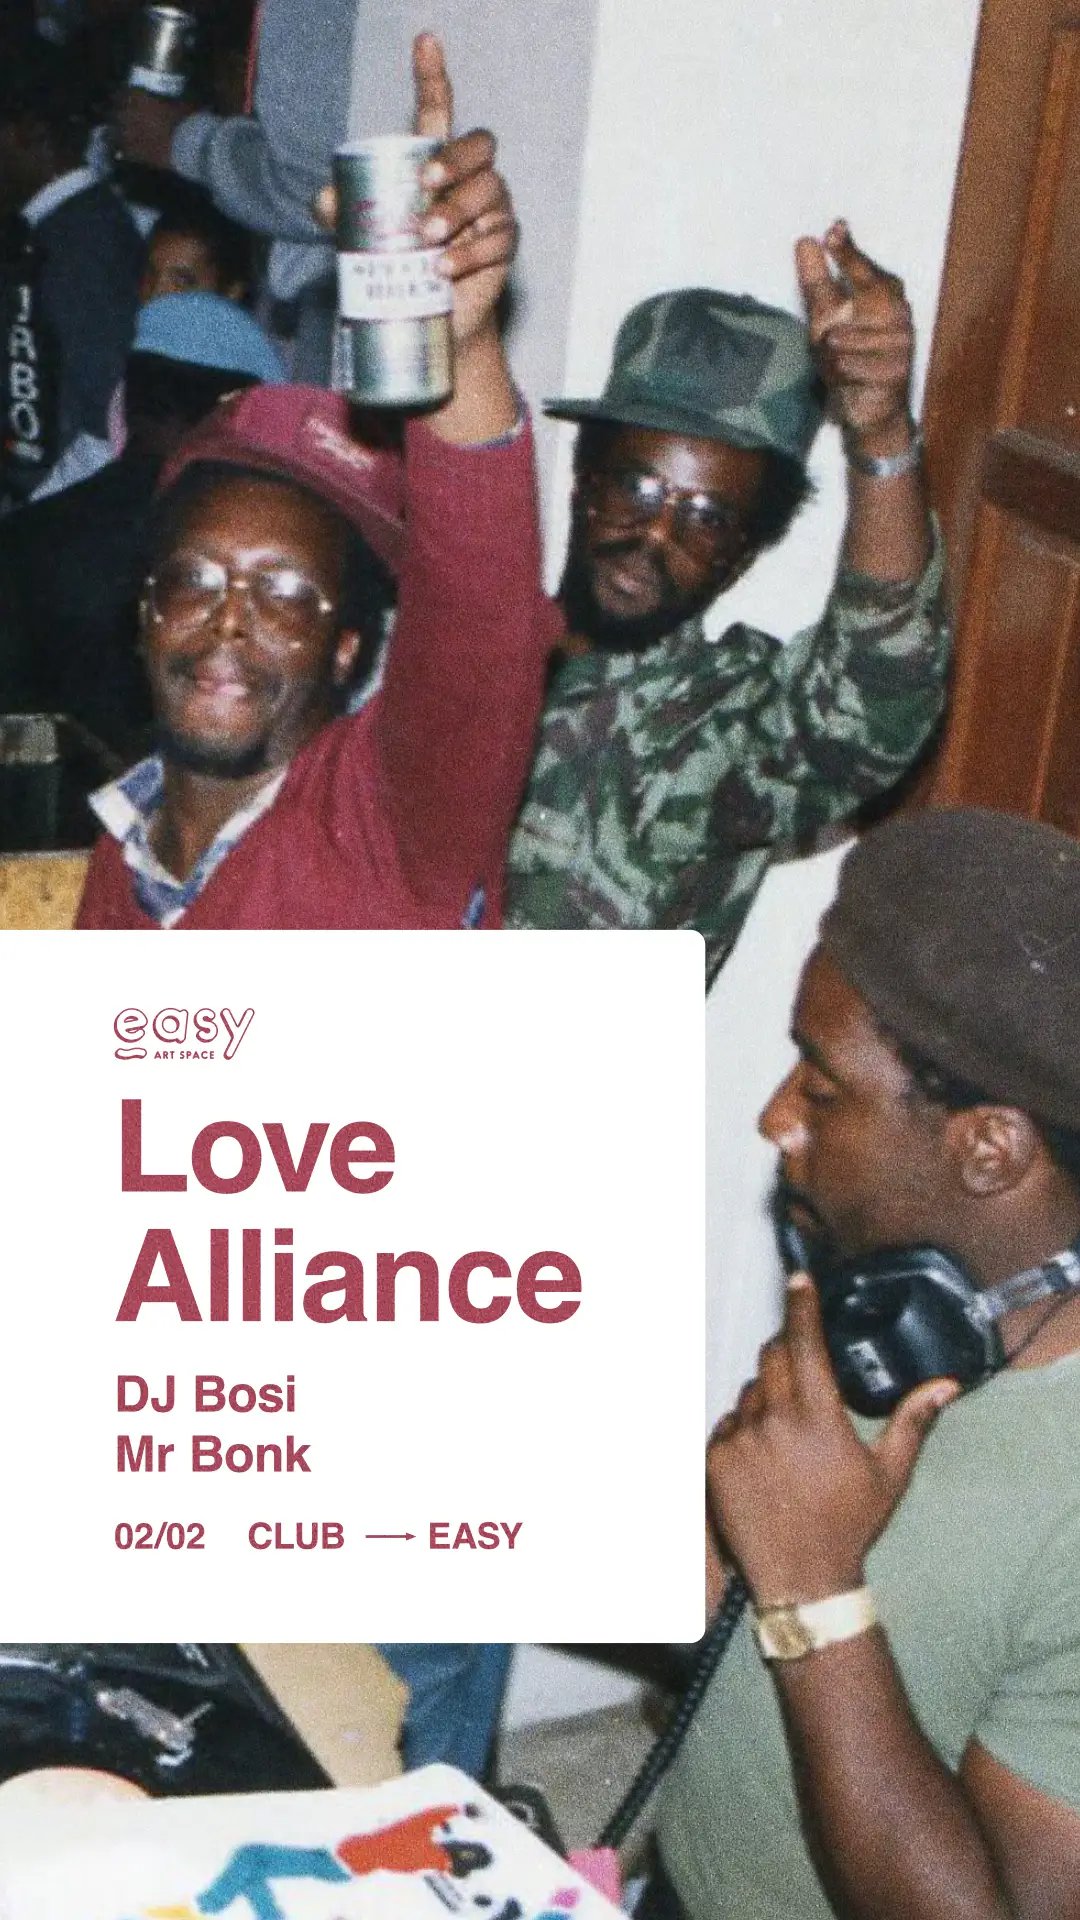 'Love Alliance' with DJ Bosi & Mr Bonk, Easy Art Space Budapest, 2 February